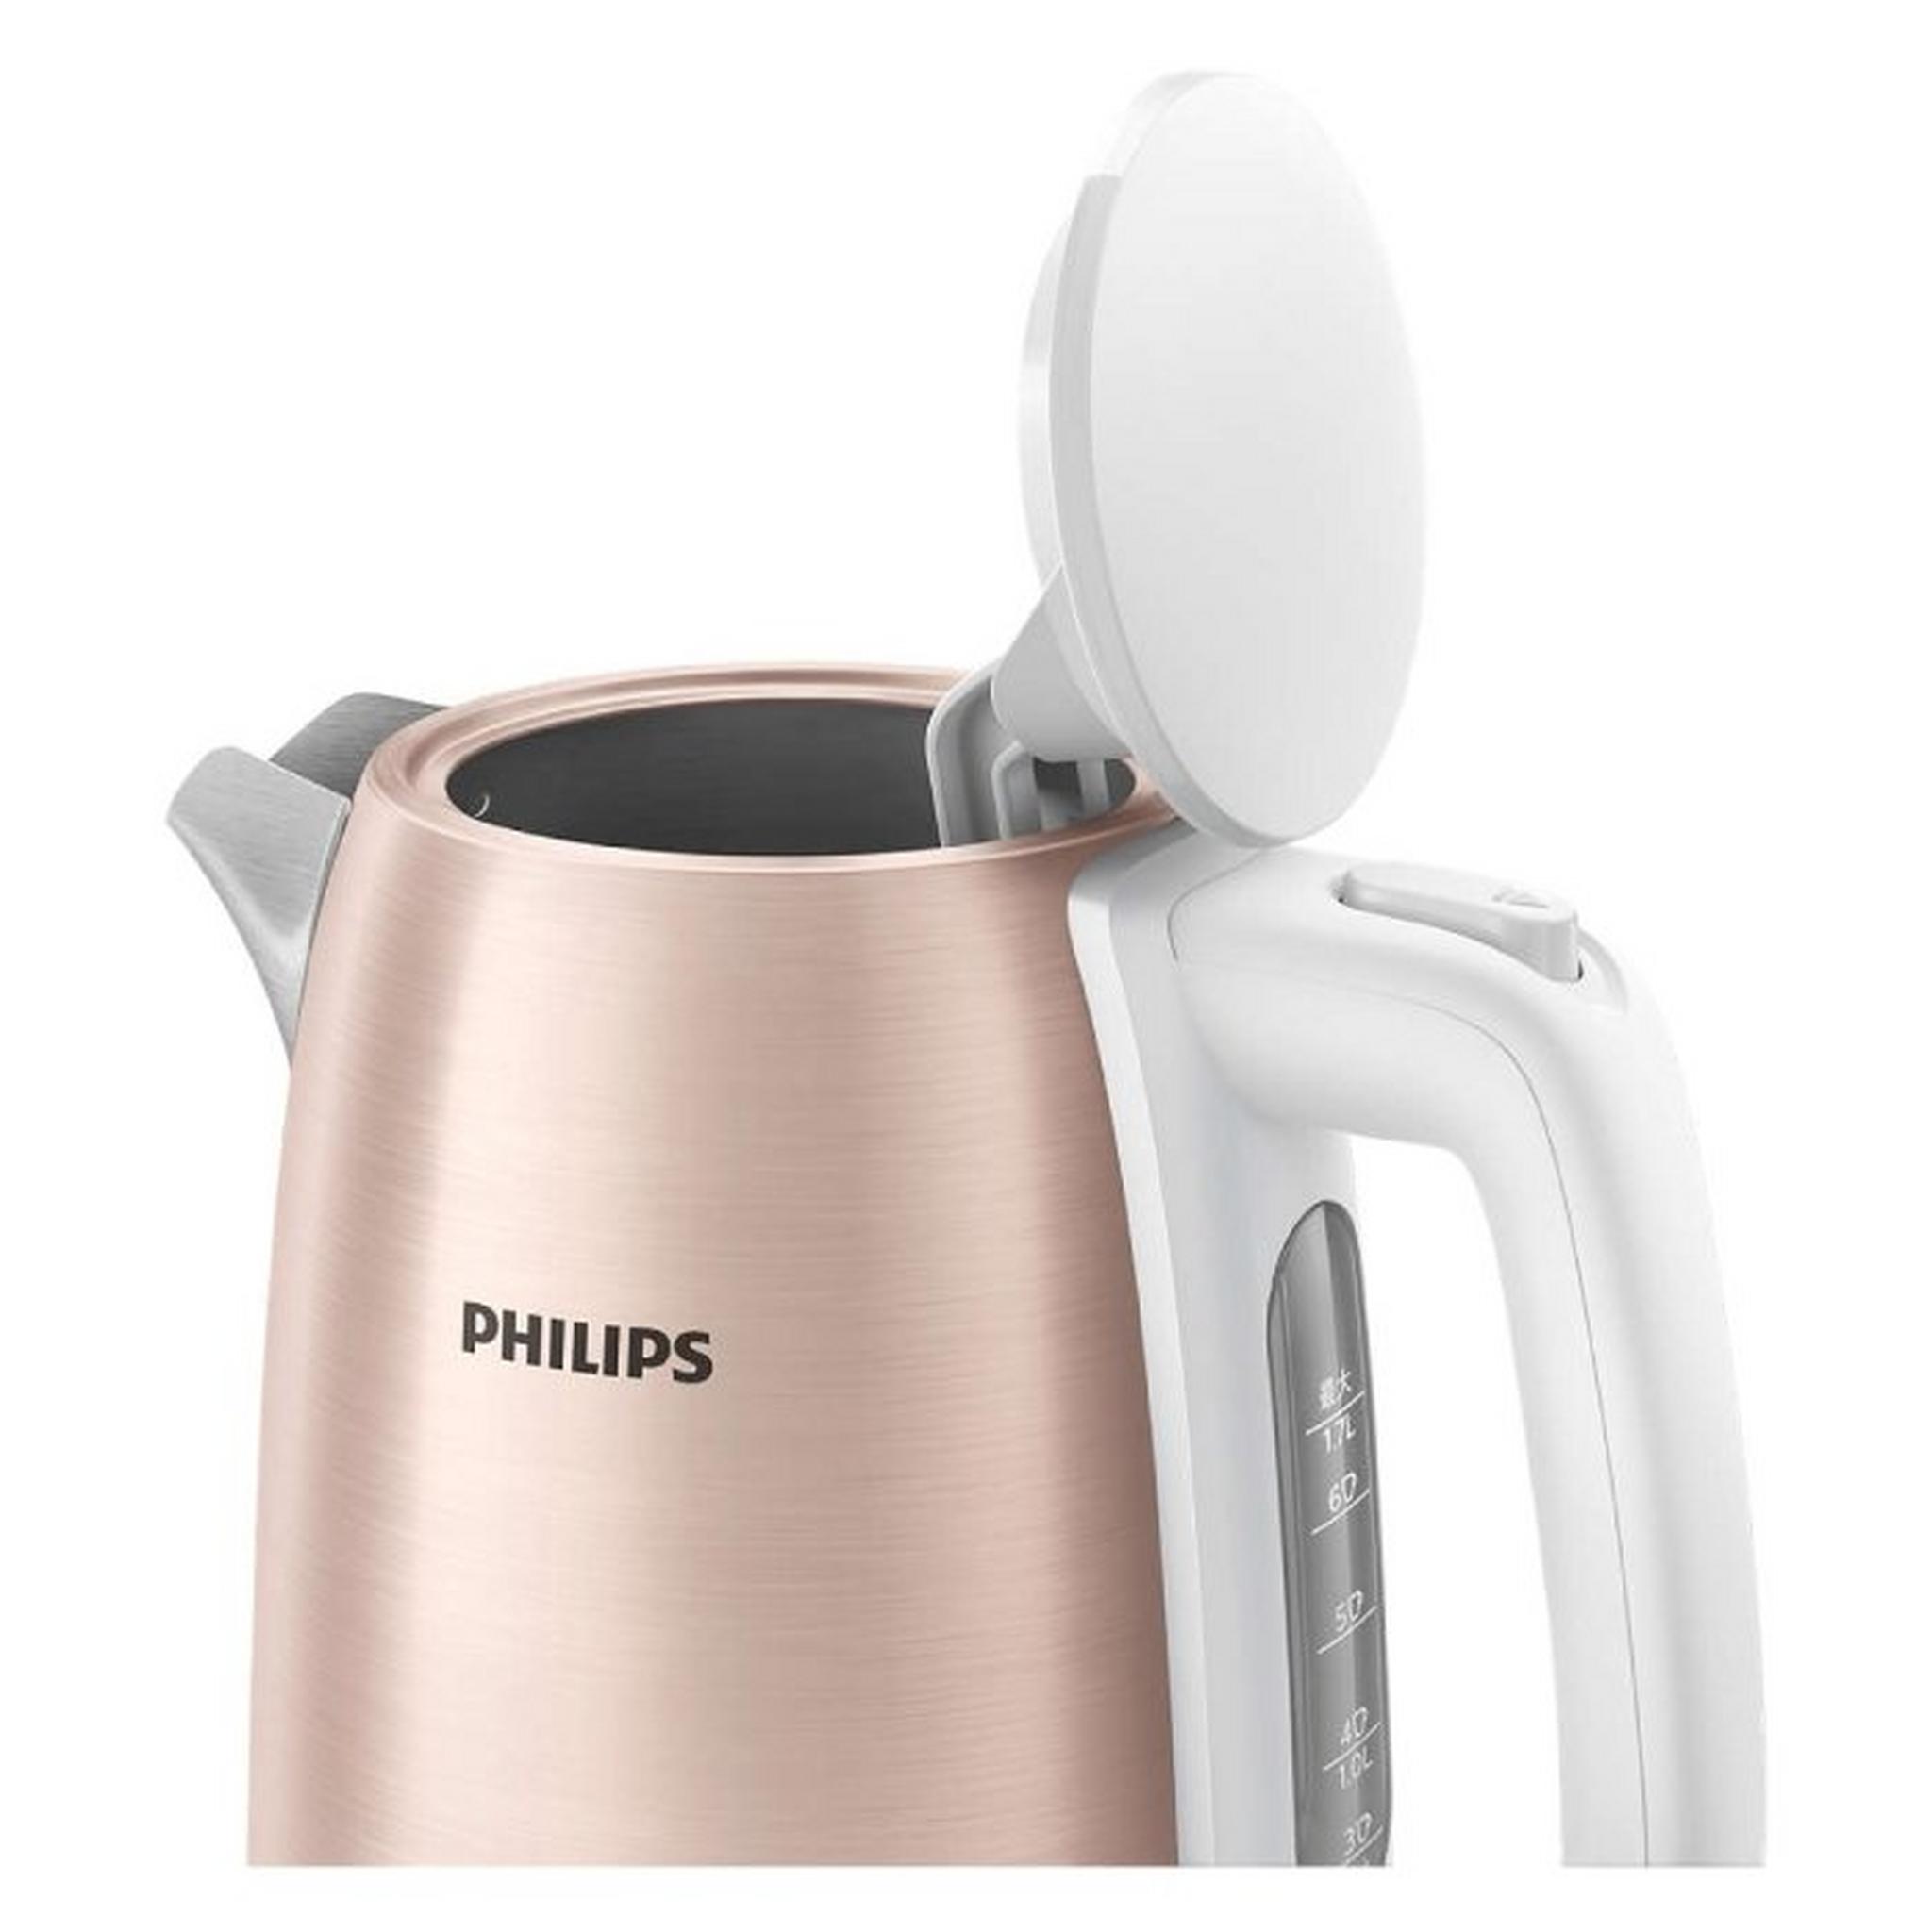 Philips 1850-2200W 1.7L Kettle - Pink (HD9350/95)